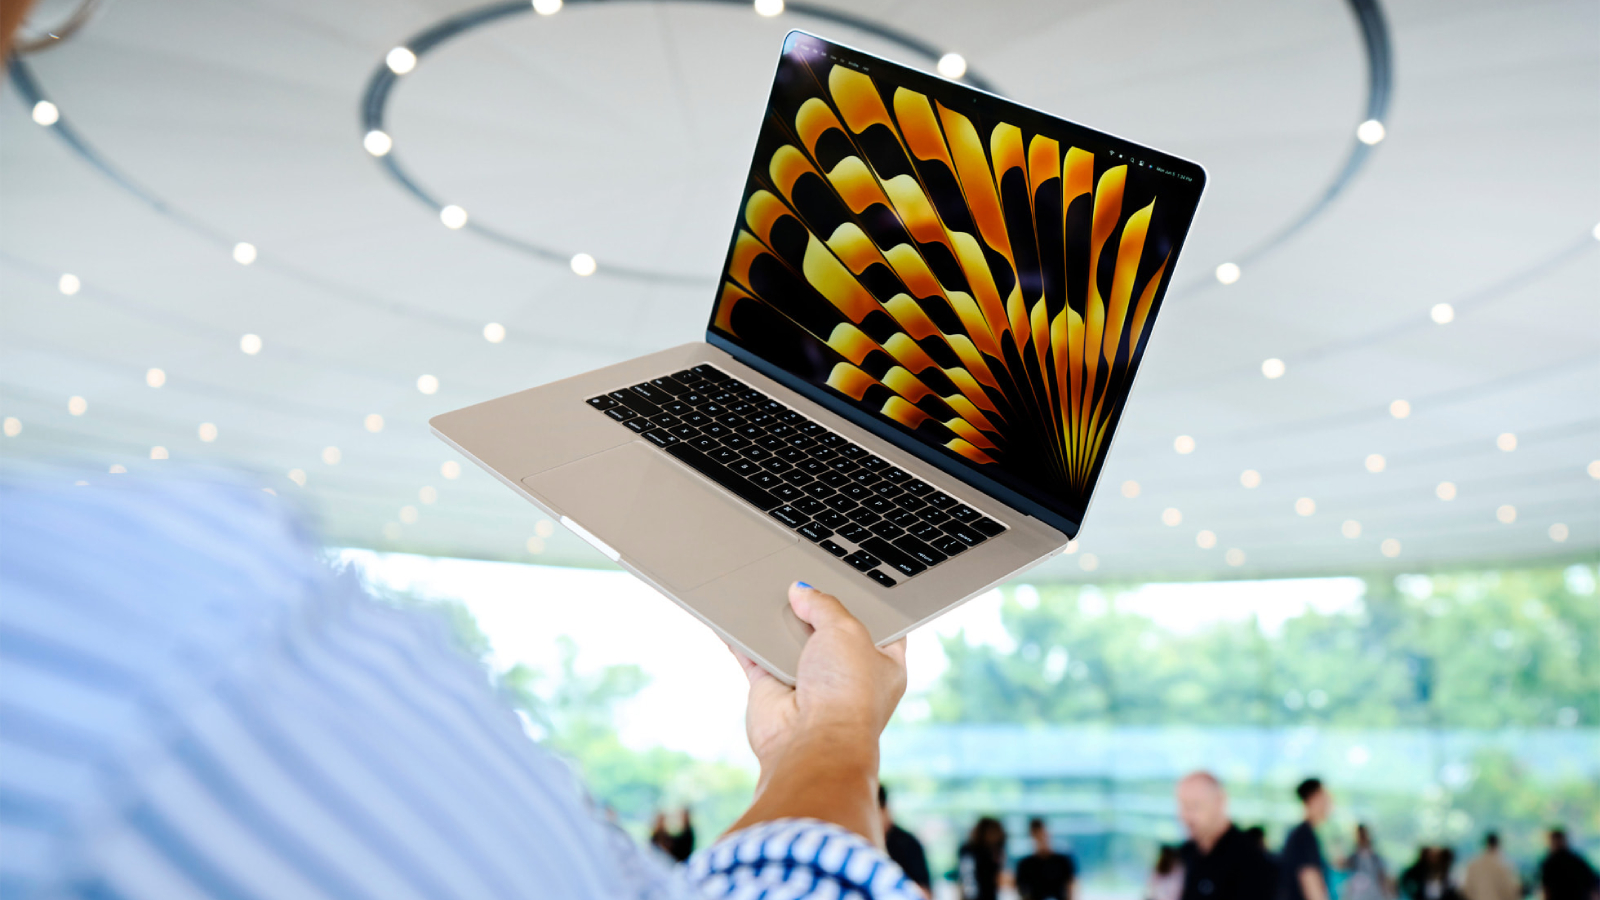 MacBook Air 15-inch hands on